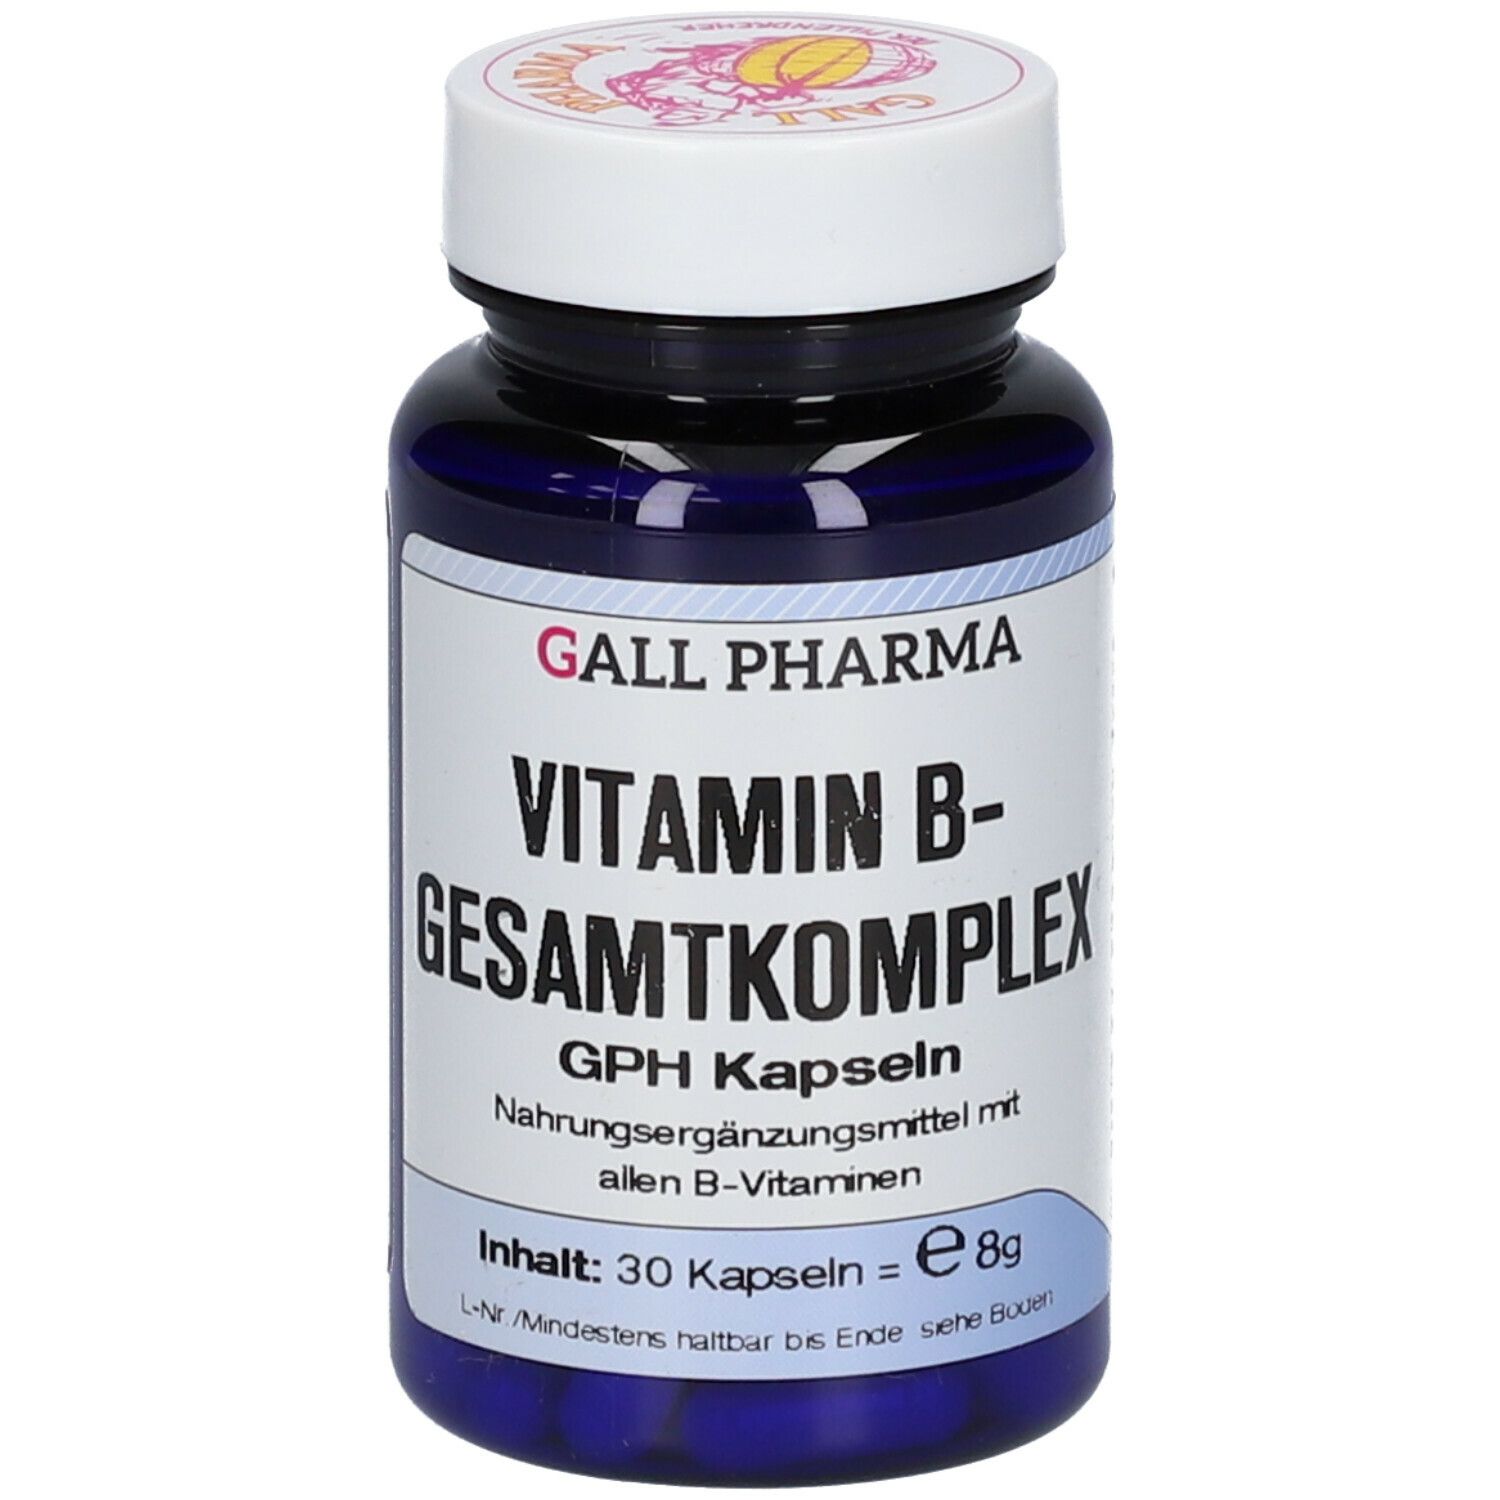 GALL PHARMA Vitamin B-Gesamtkomplex GPH Kapseln